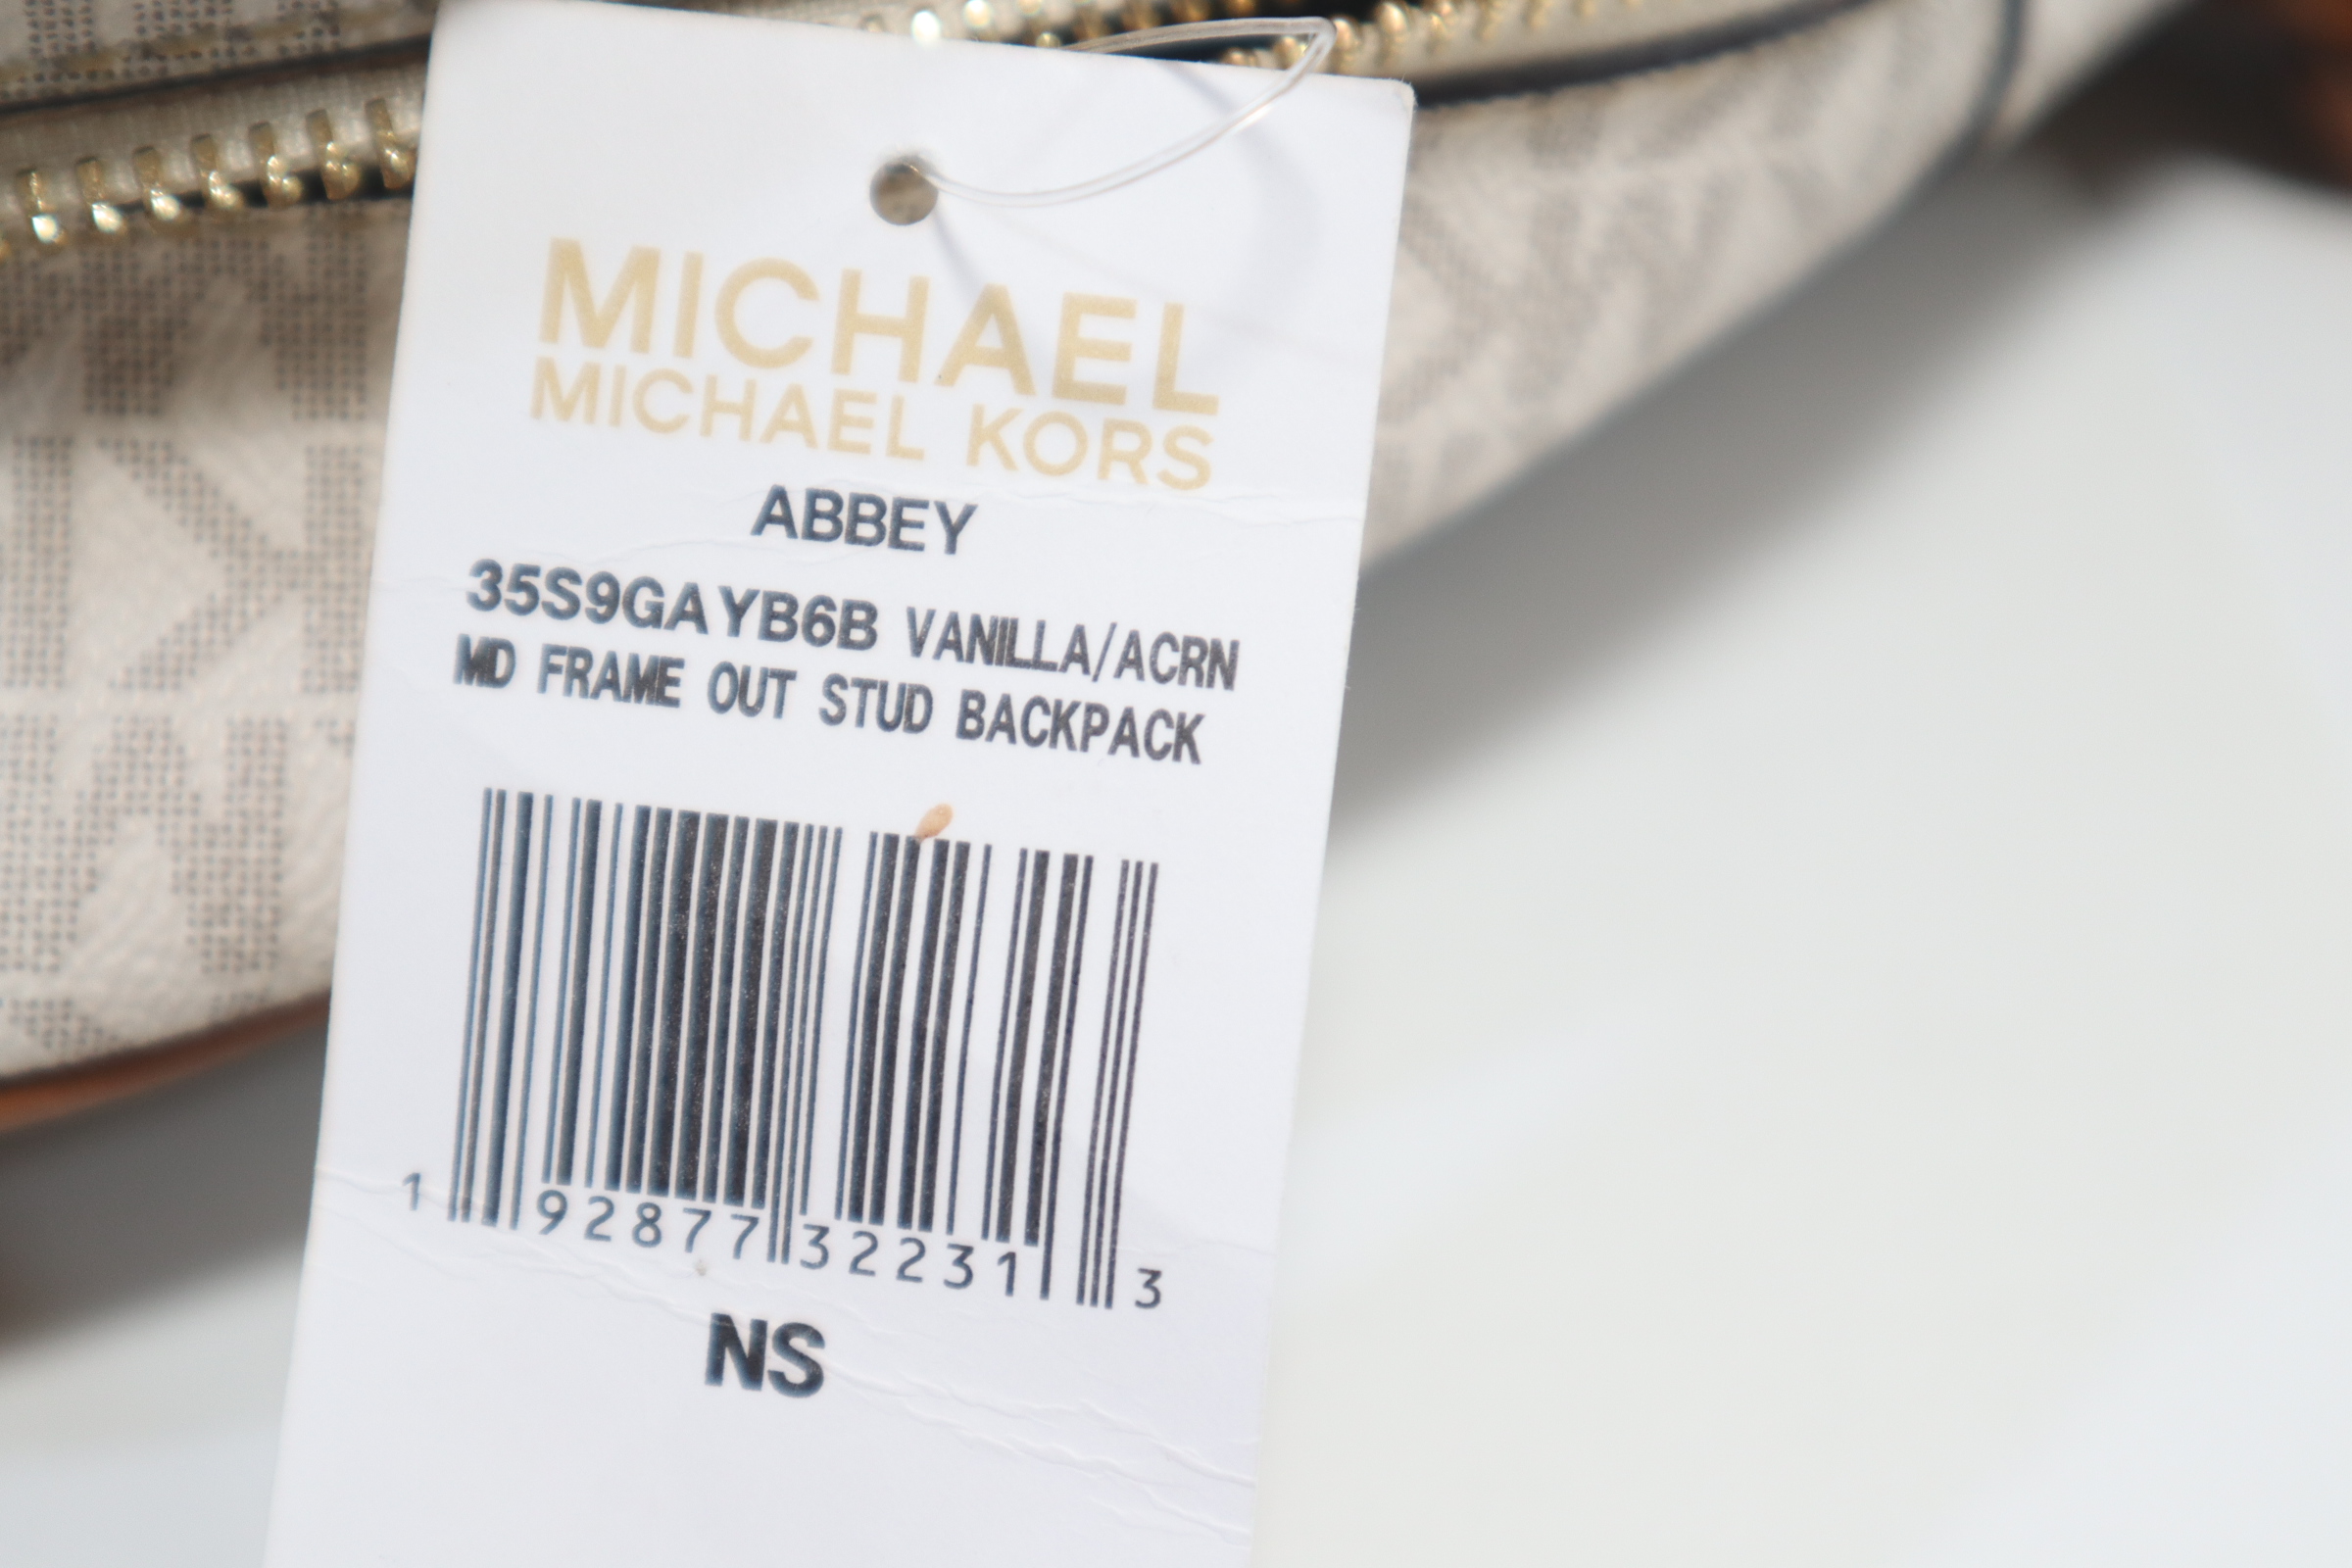 Michael Kors ABBEY 35S9GAYB6B Medium Frame Out Stud Backpack 2313  Vanilla/Acorn